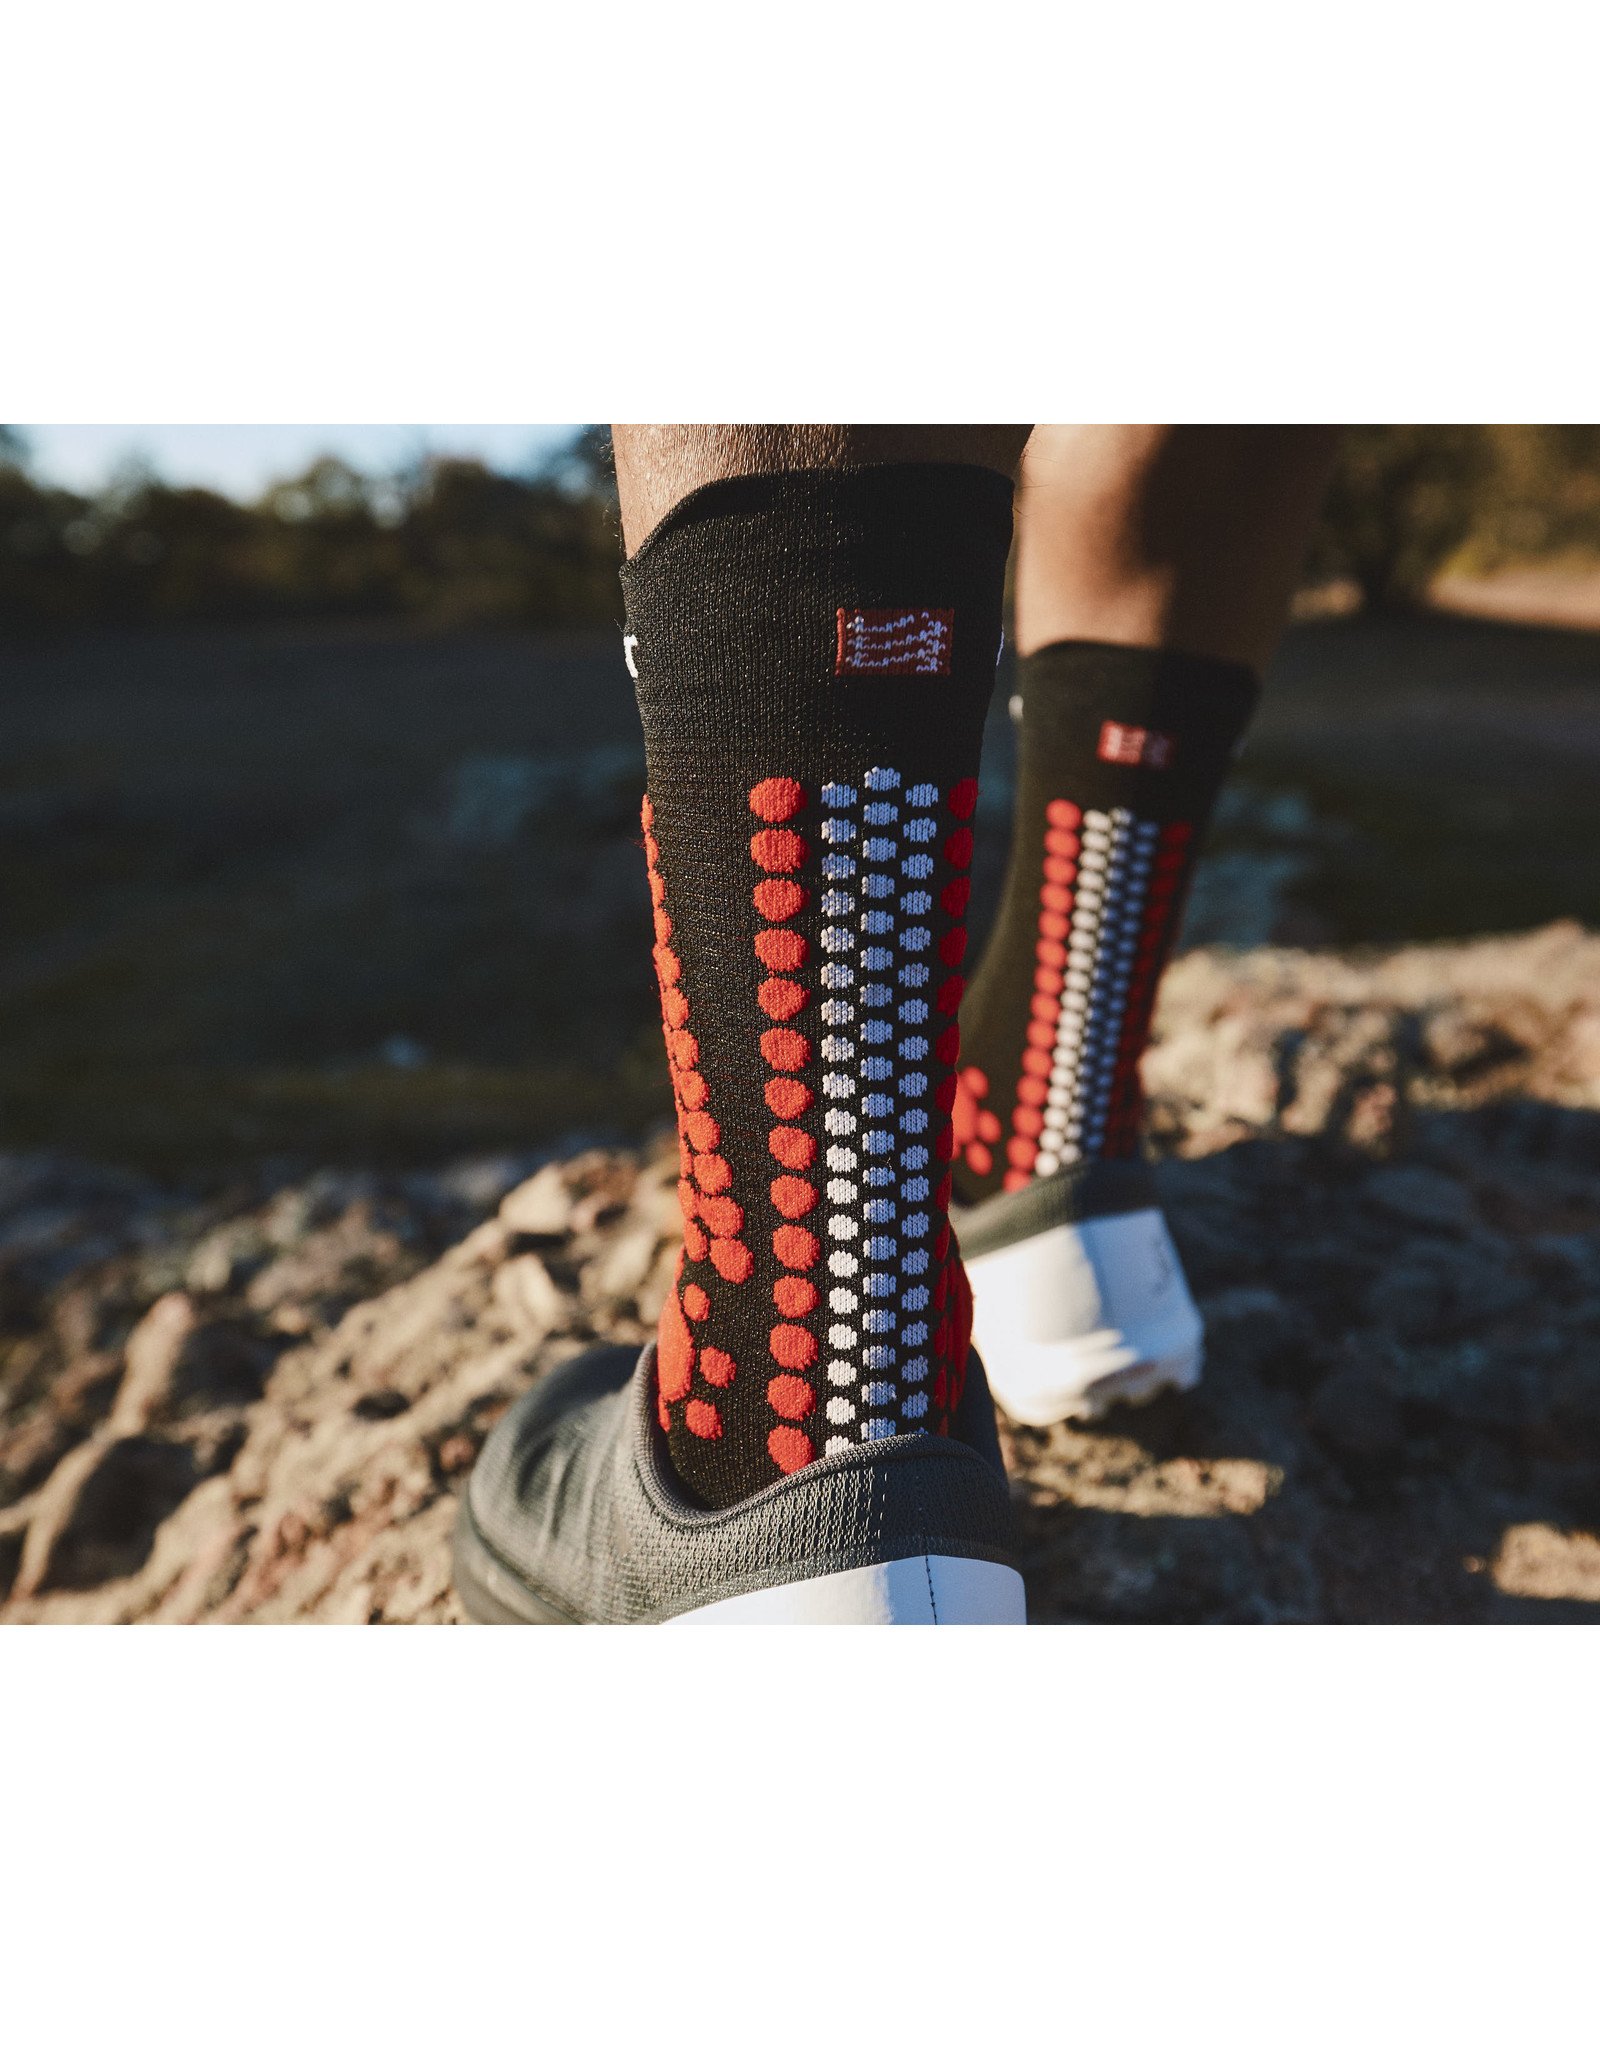 Pro Racing Socks v4.0 Trail - Black/Red